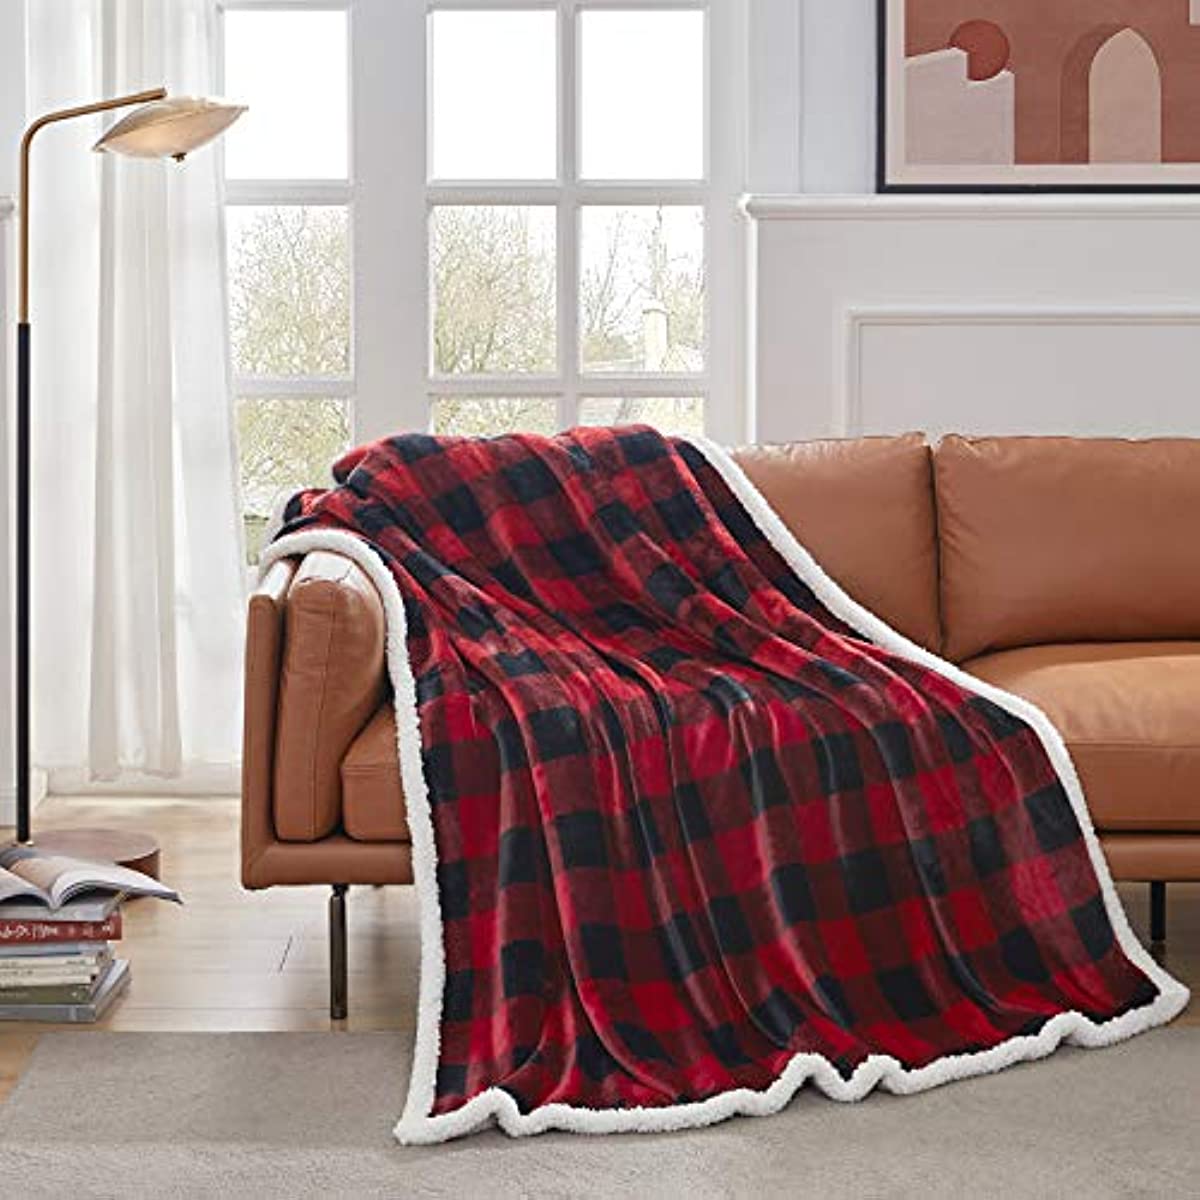 Sherpa Red and Black Buffalo Plaid Christmas Throw Blanket Fuzzy Fluffy Soft Cozy Blanket